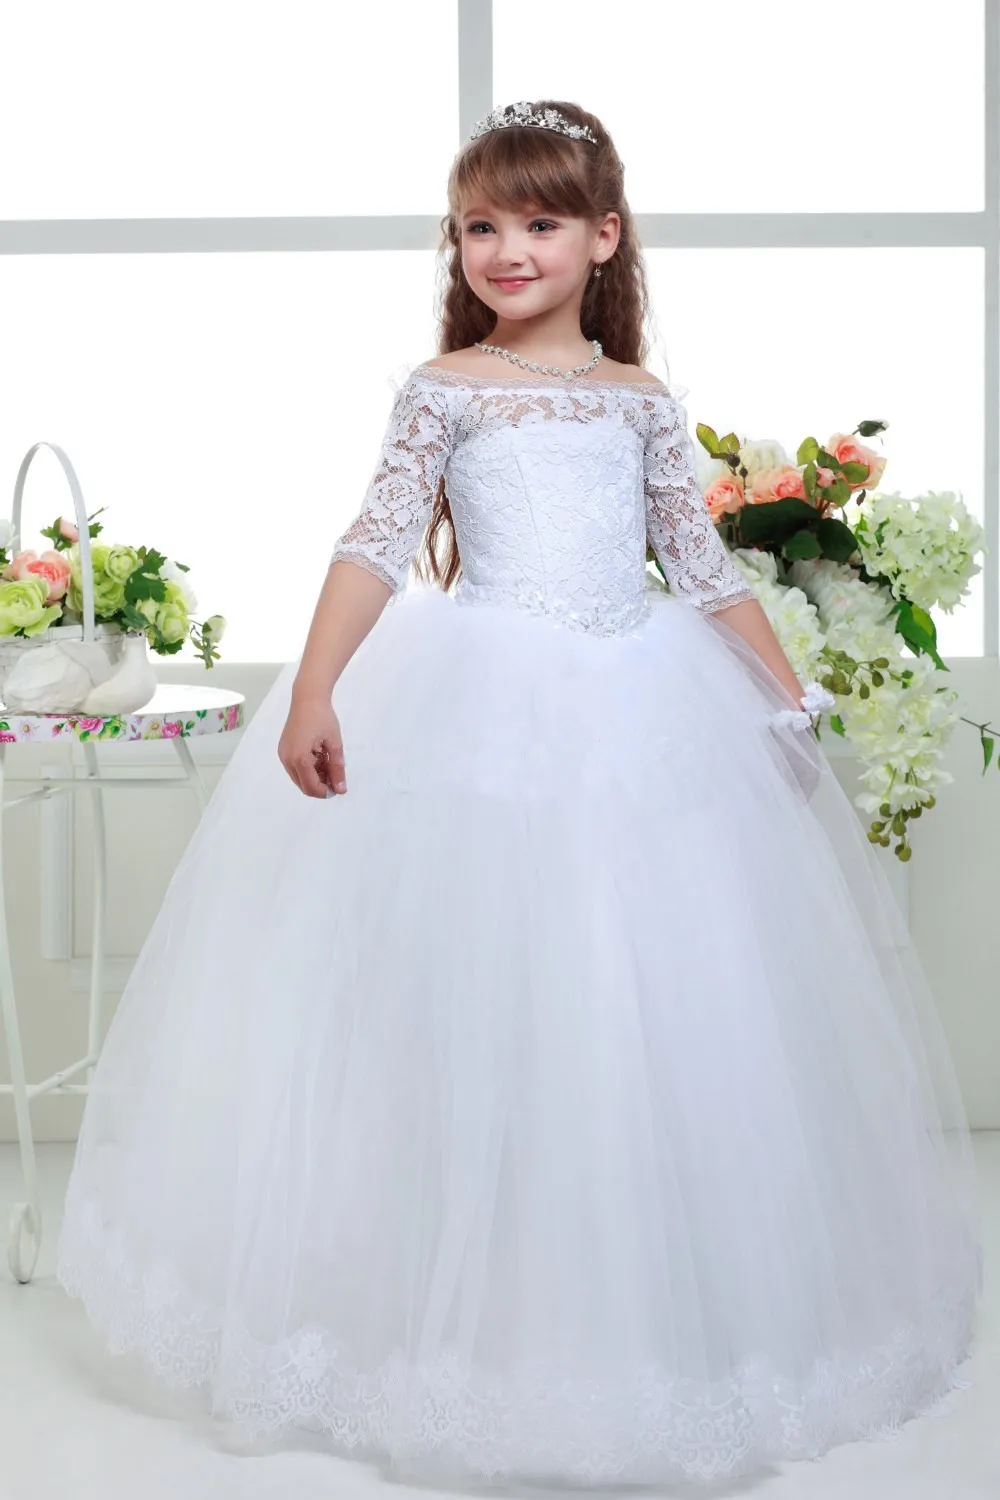 princhar Lace Satin Flower Girl Dress Princess Easter Wedding Party Dress